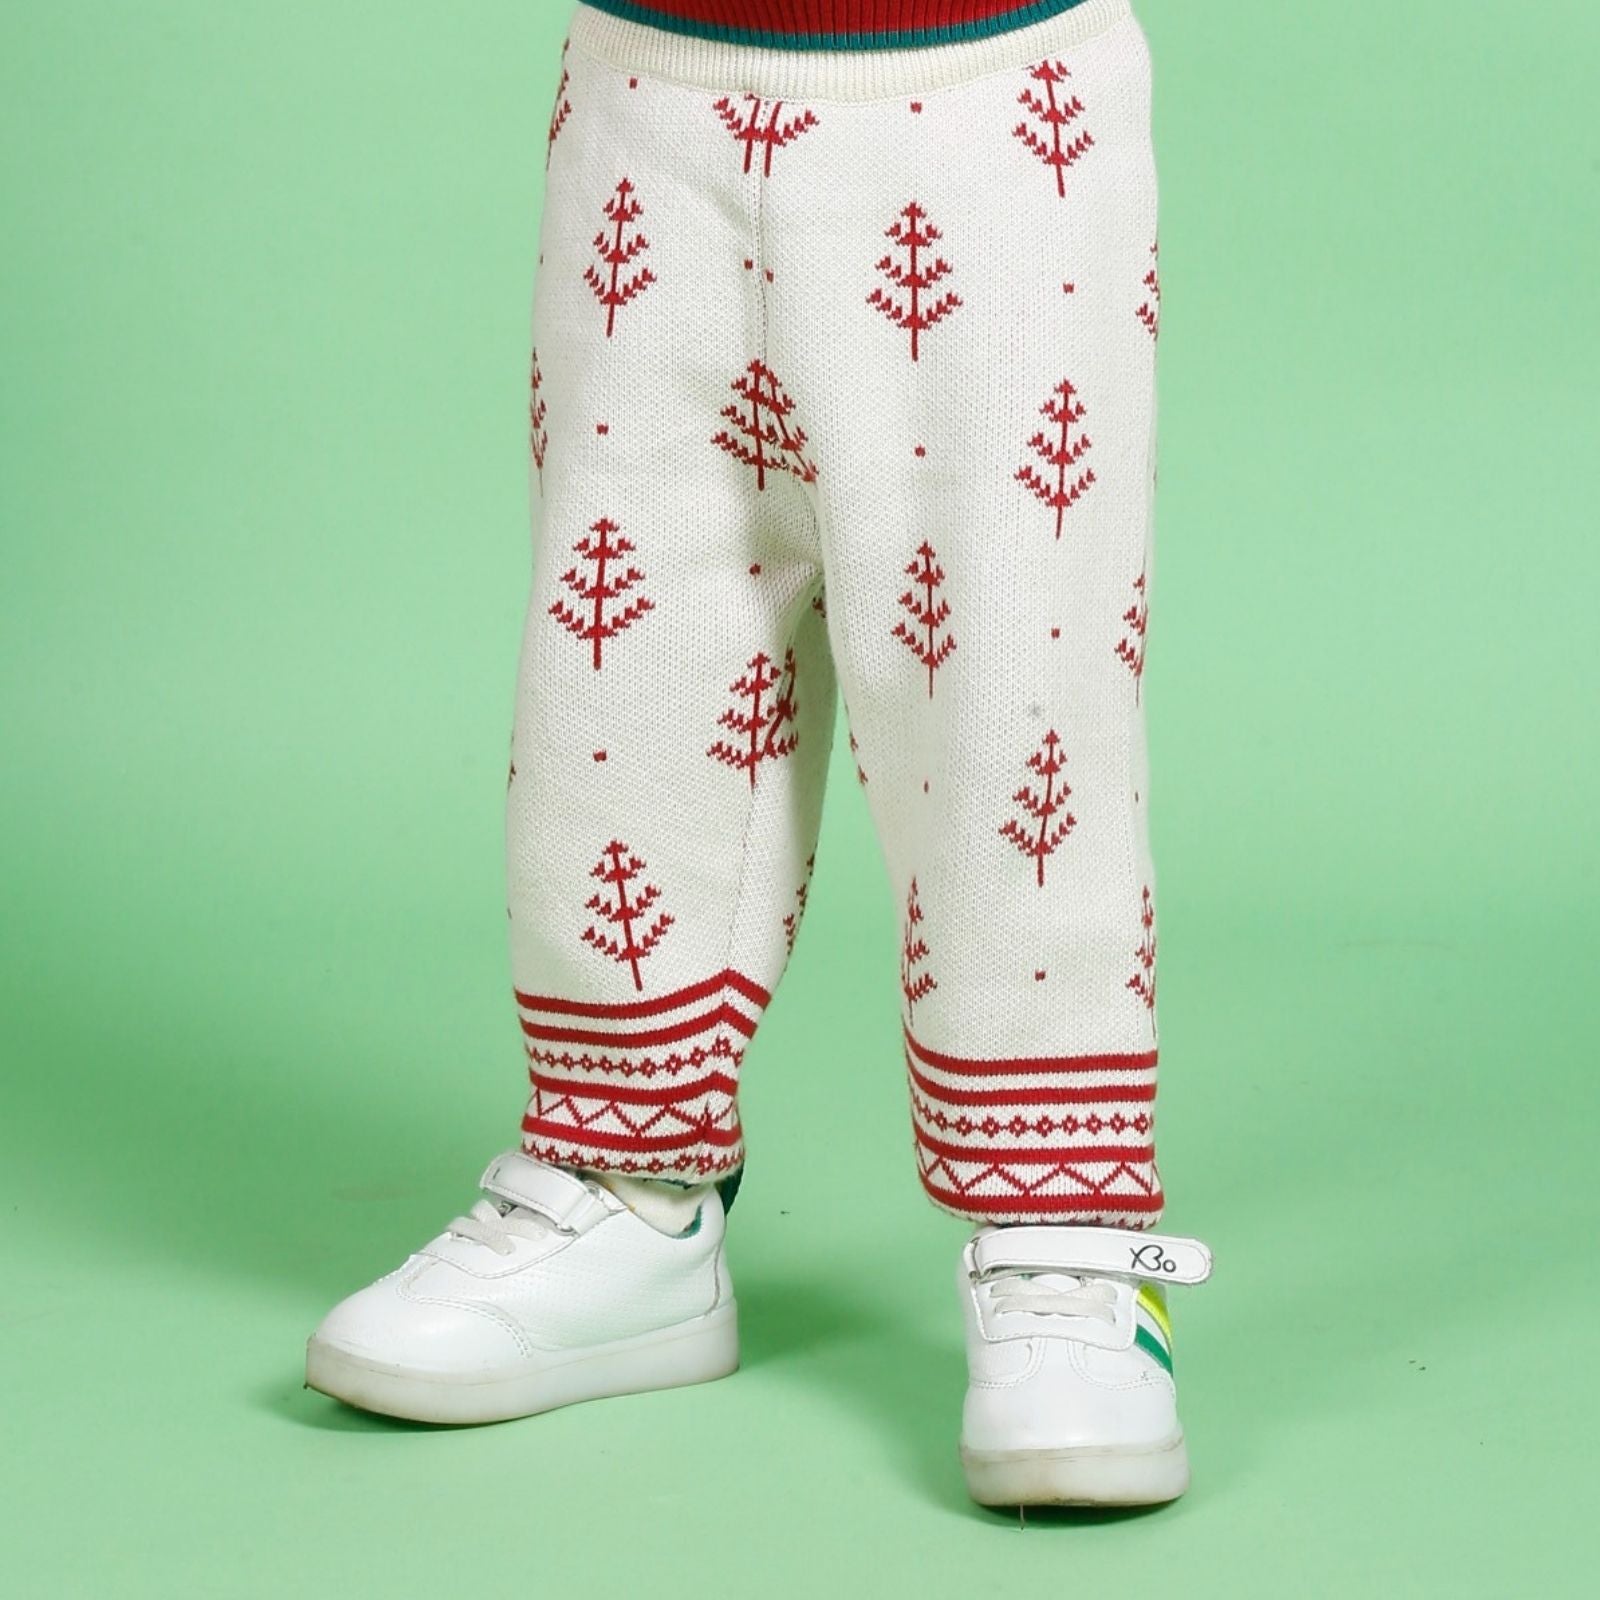 Greendeer Jaunty Reindeer, Joyful Reindeer & Hearth Warming Bear 100% Cotton Sweater with Lower Set of 5